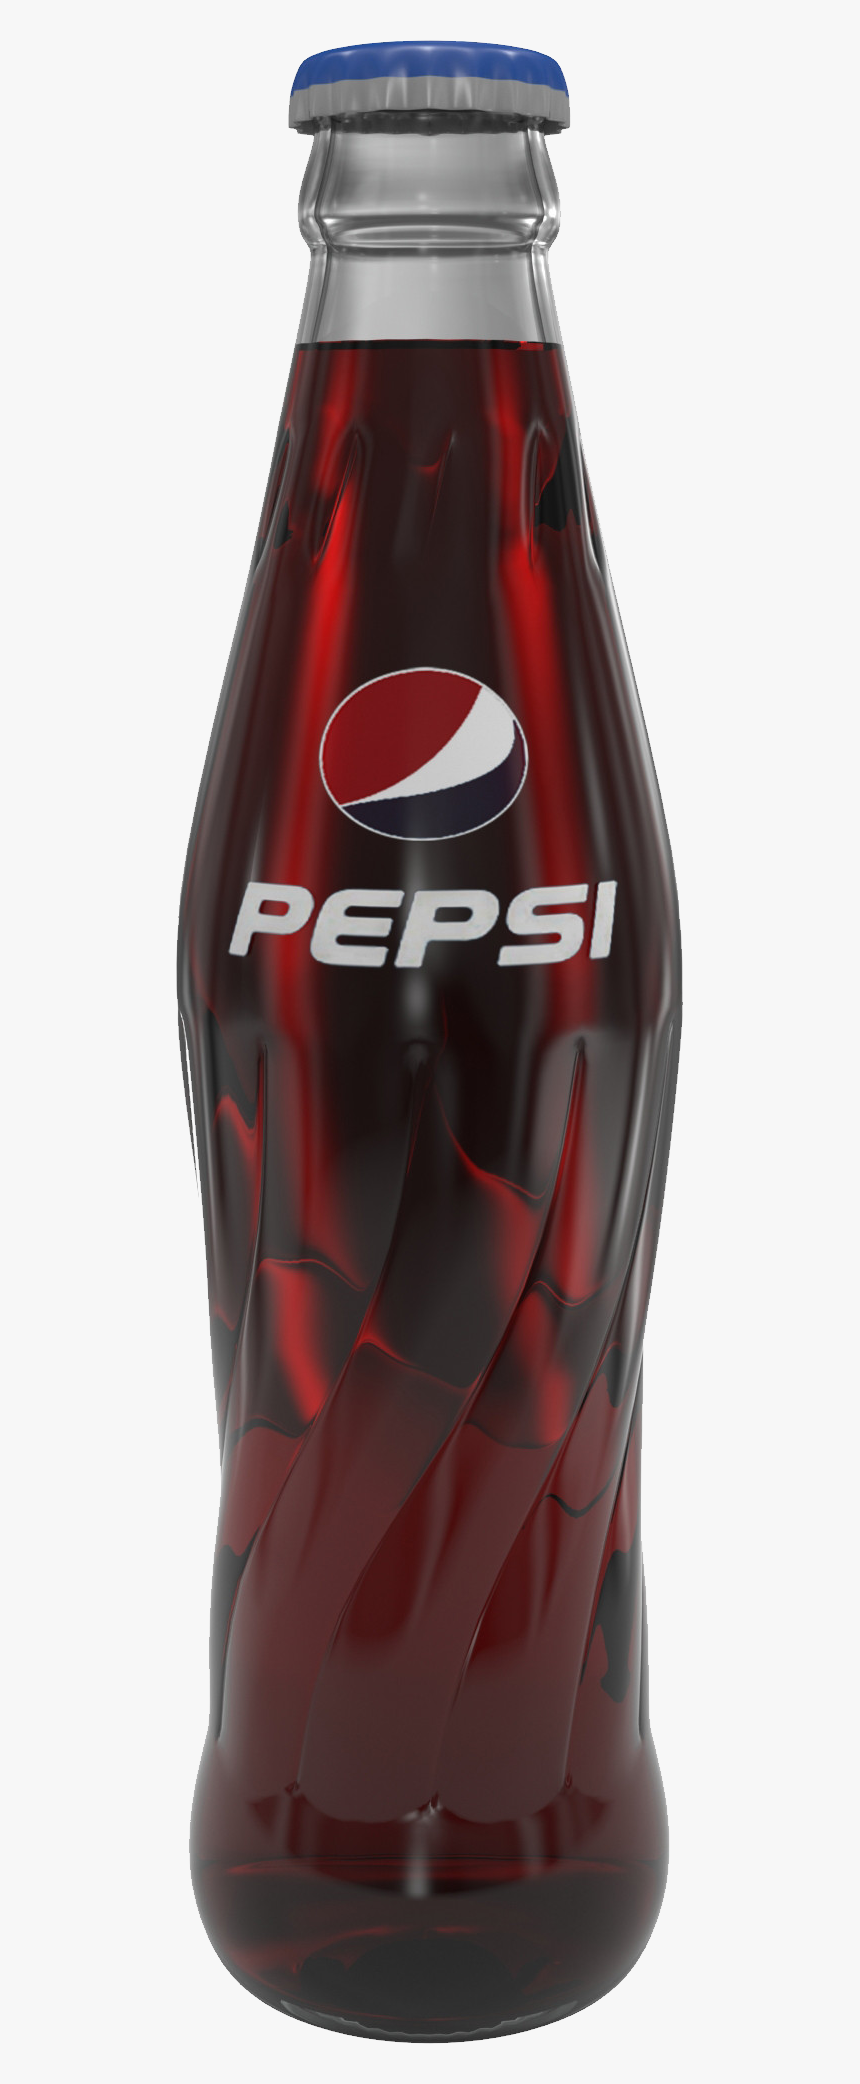 Pepsi Bottle Png Image - Pepsi, Transparent Png, Free Download